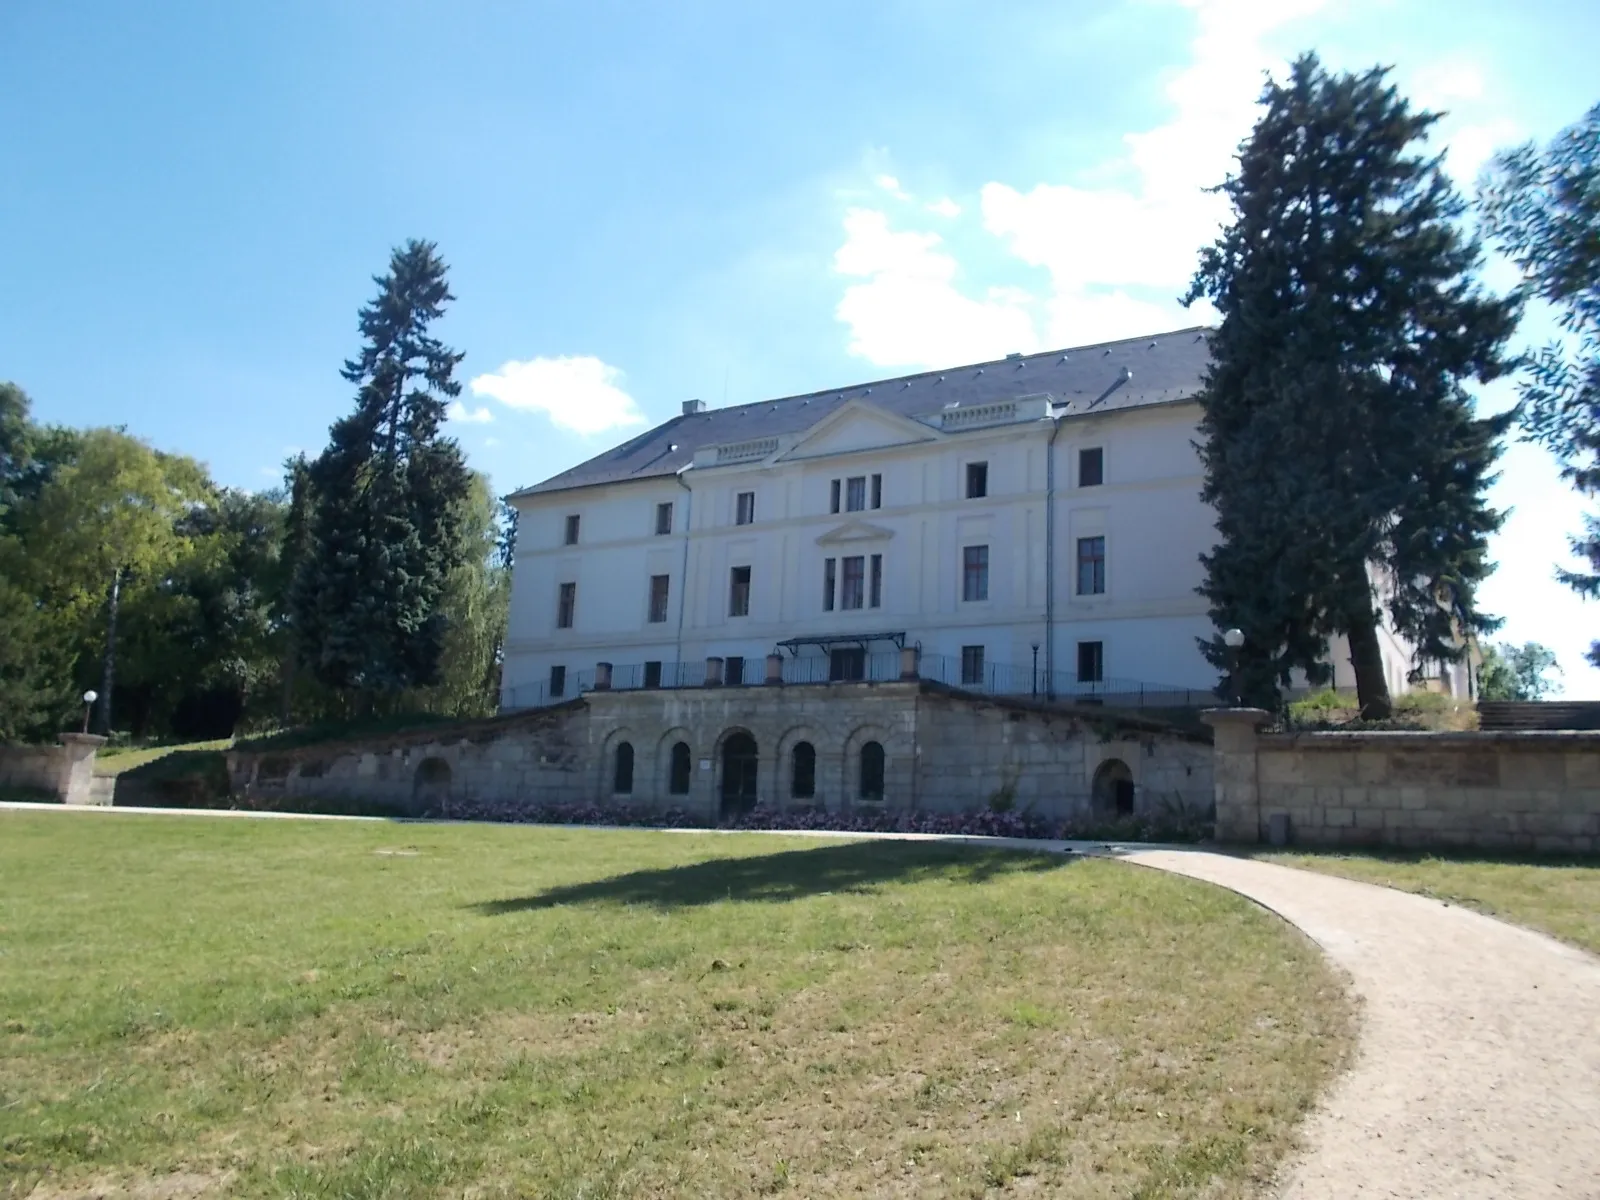 Photo showing: : Batthyány Mansion, east. - Kossuth Street, Bicske, Fejér County, Hungary.